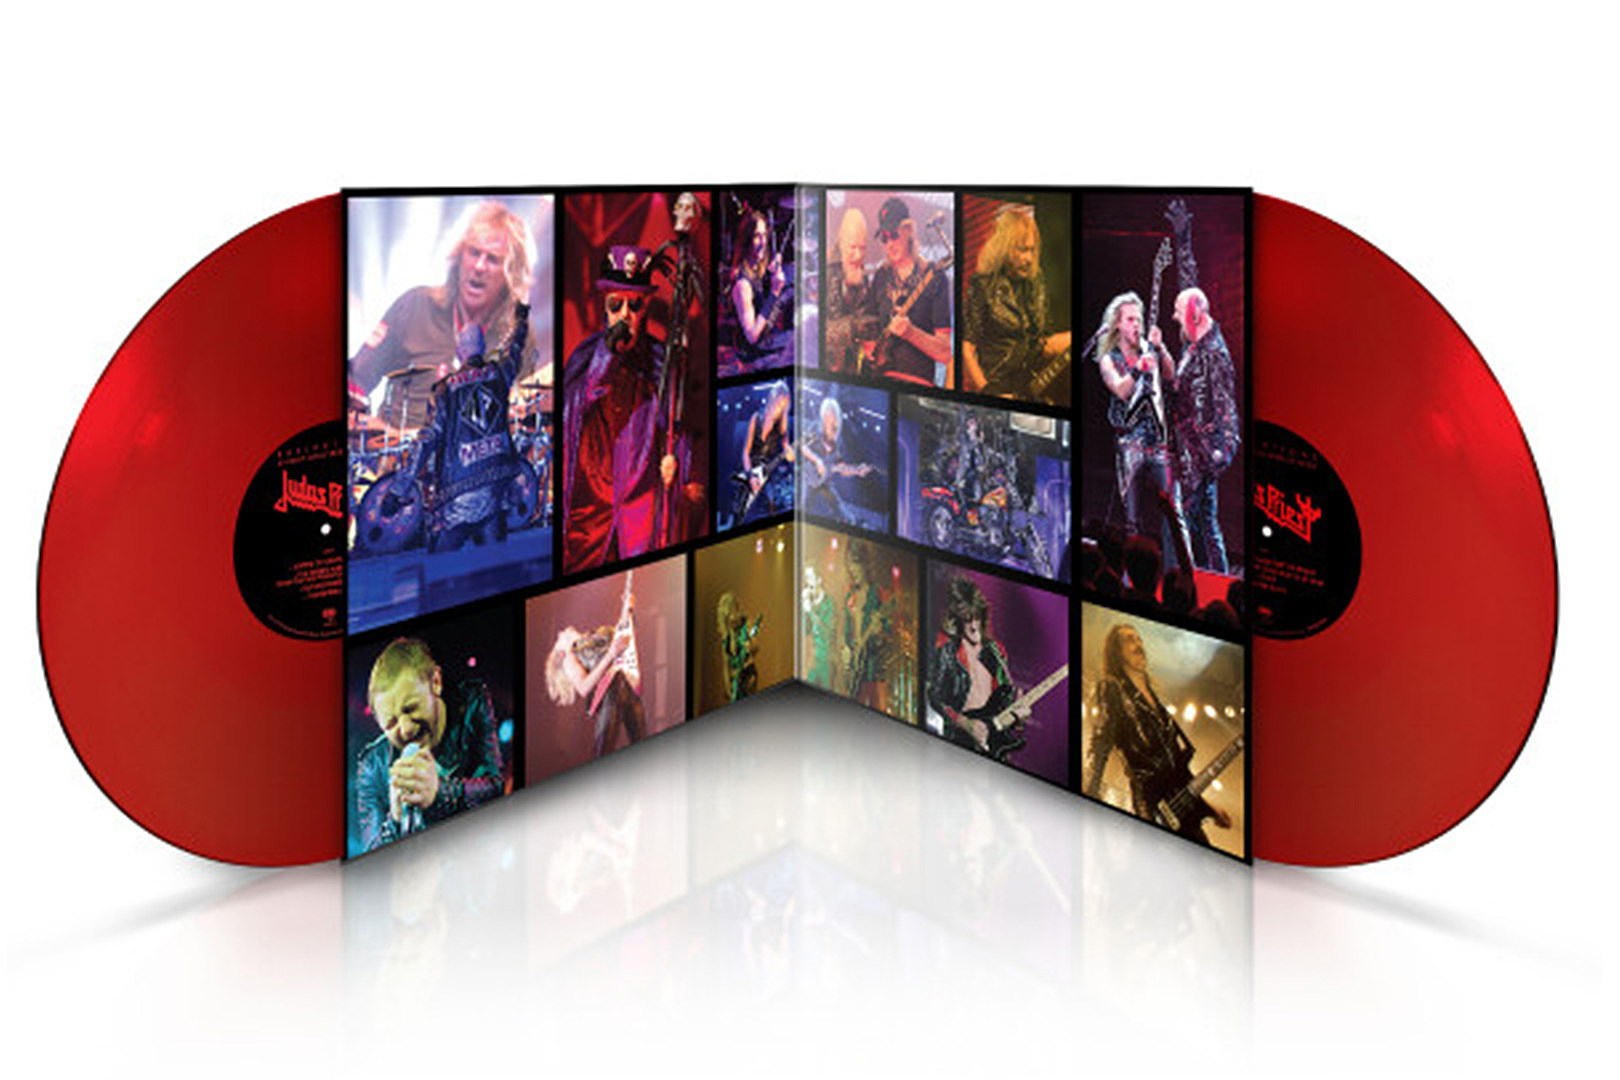 Judas Priest Announce Huge 50th Anniversary 'Reflections' Box Set